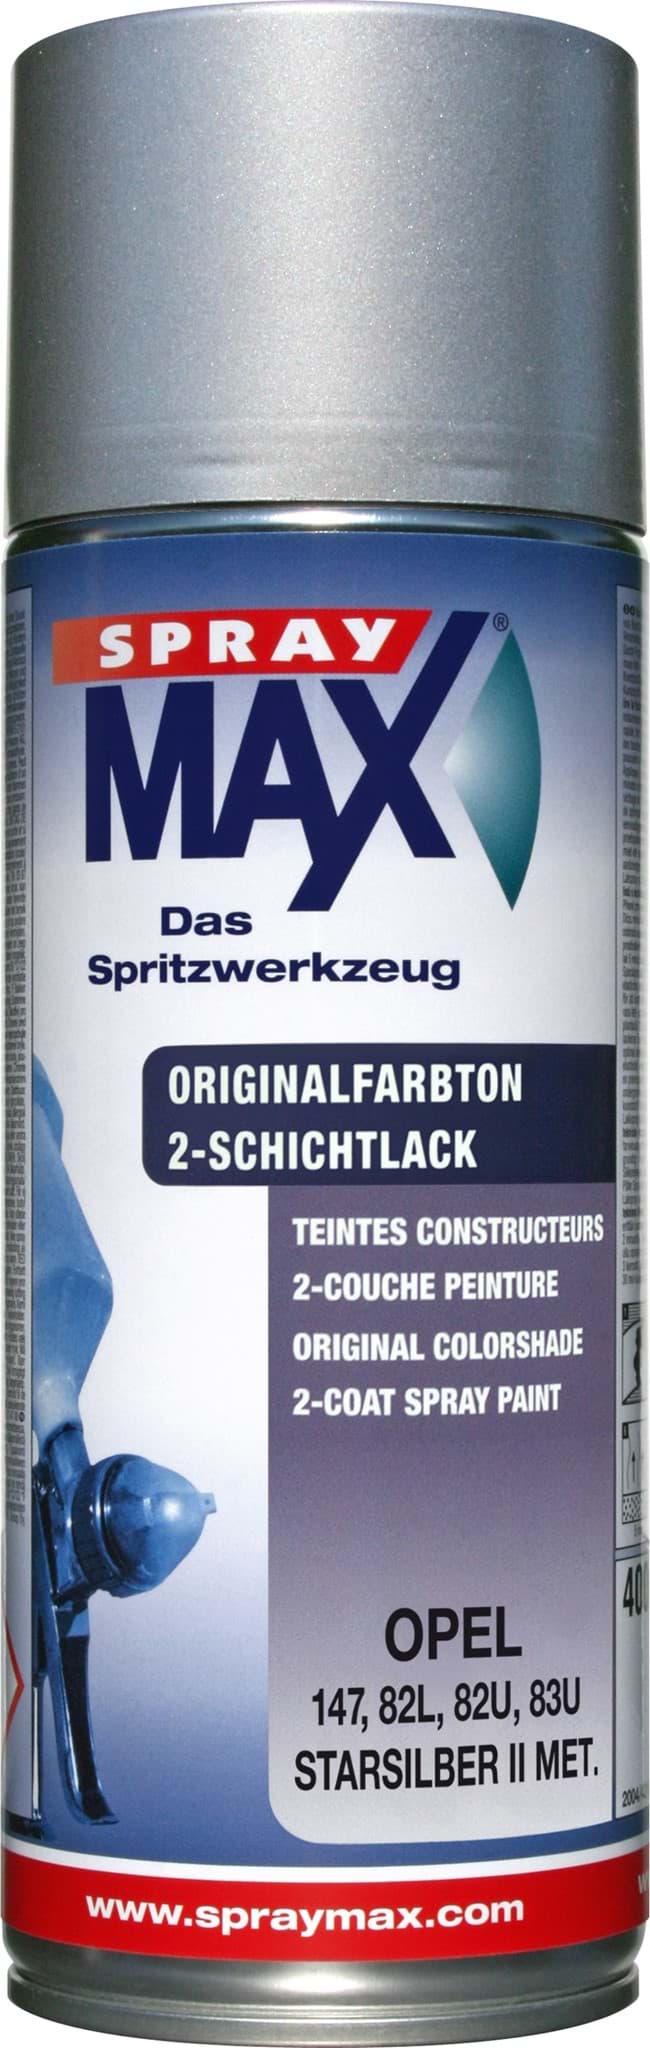 SprayMax Originalfarbton für Opel 147 starsilberII met. resmi